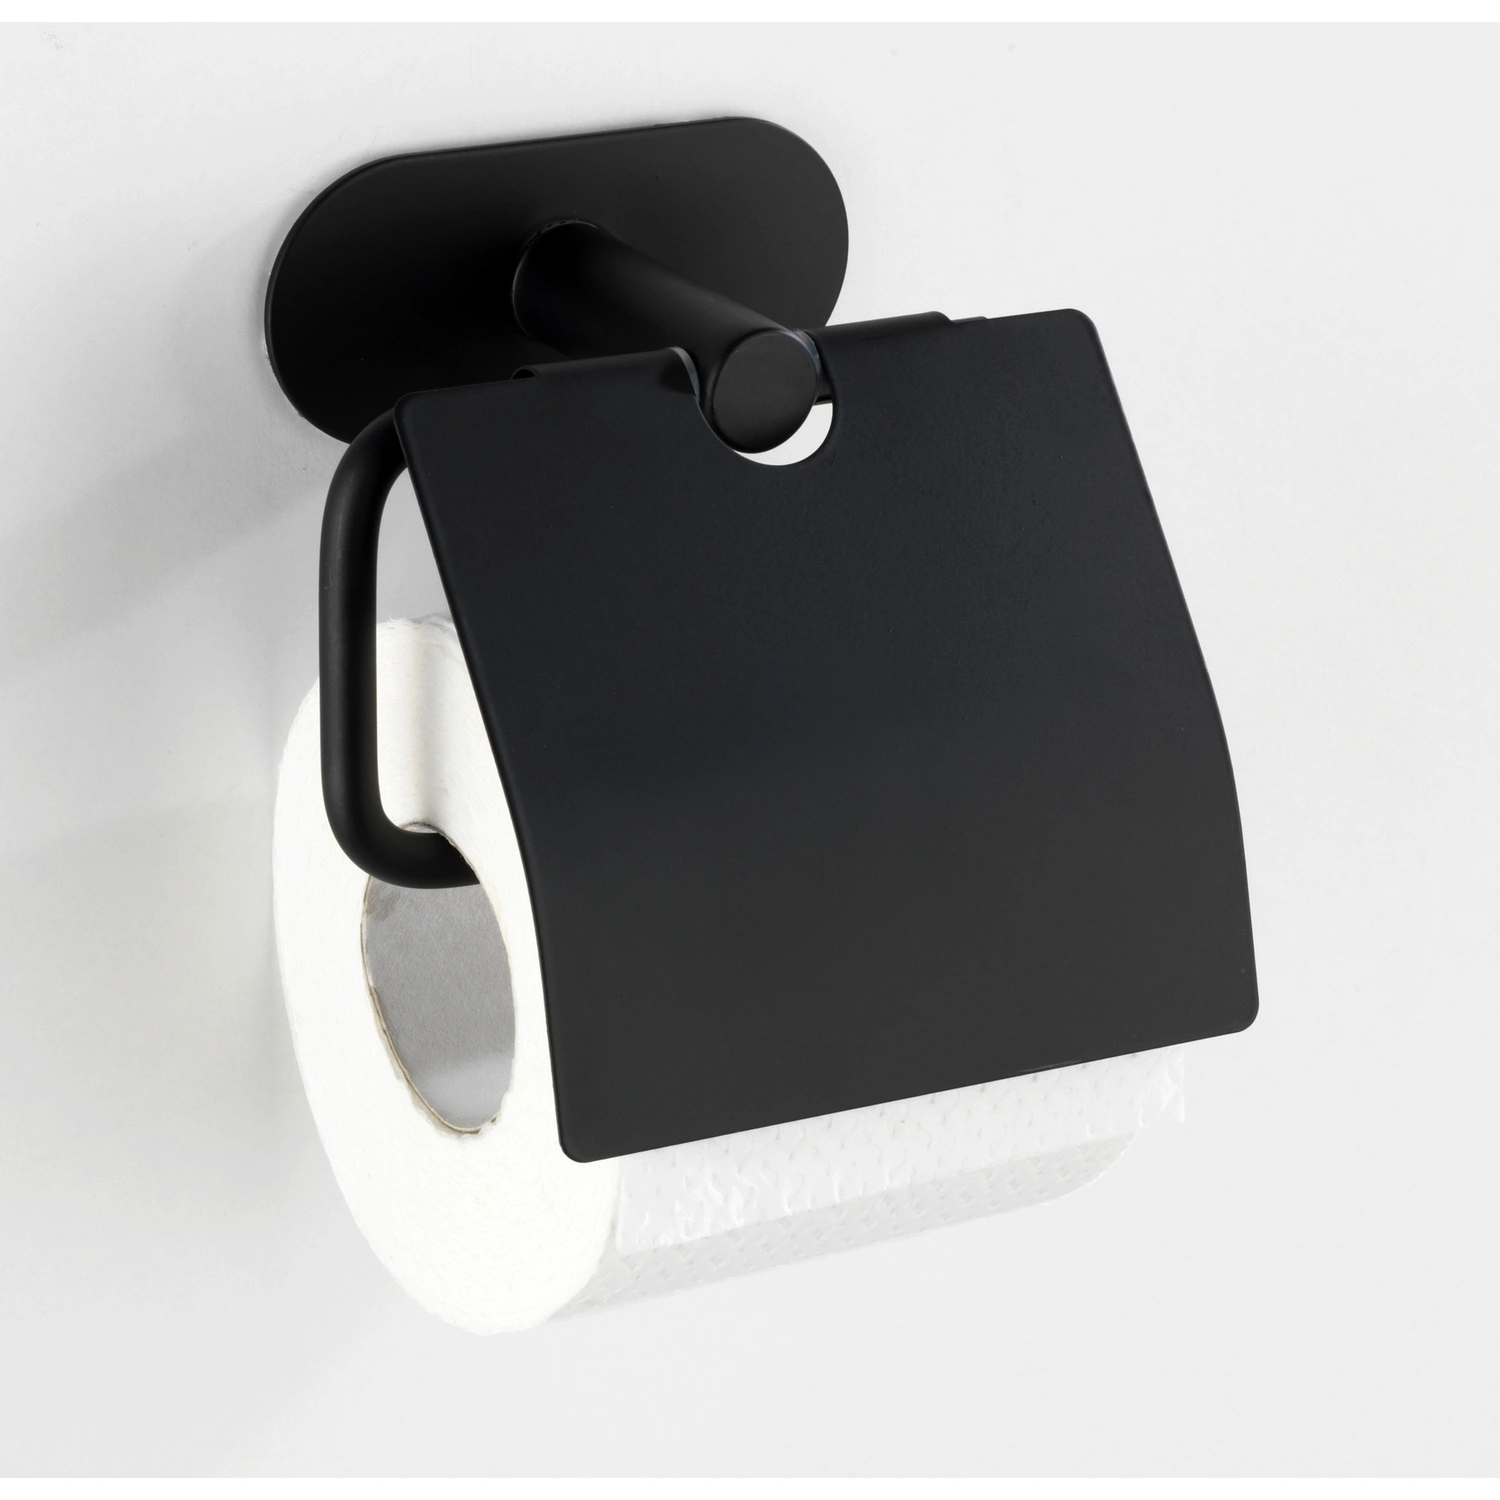 WENKO Toilettenpapierhalter »Turbo-Loc Orea black«, Edelstahl, schwarz/matt